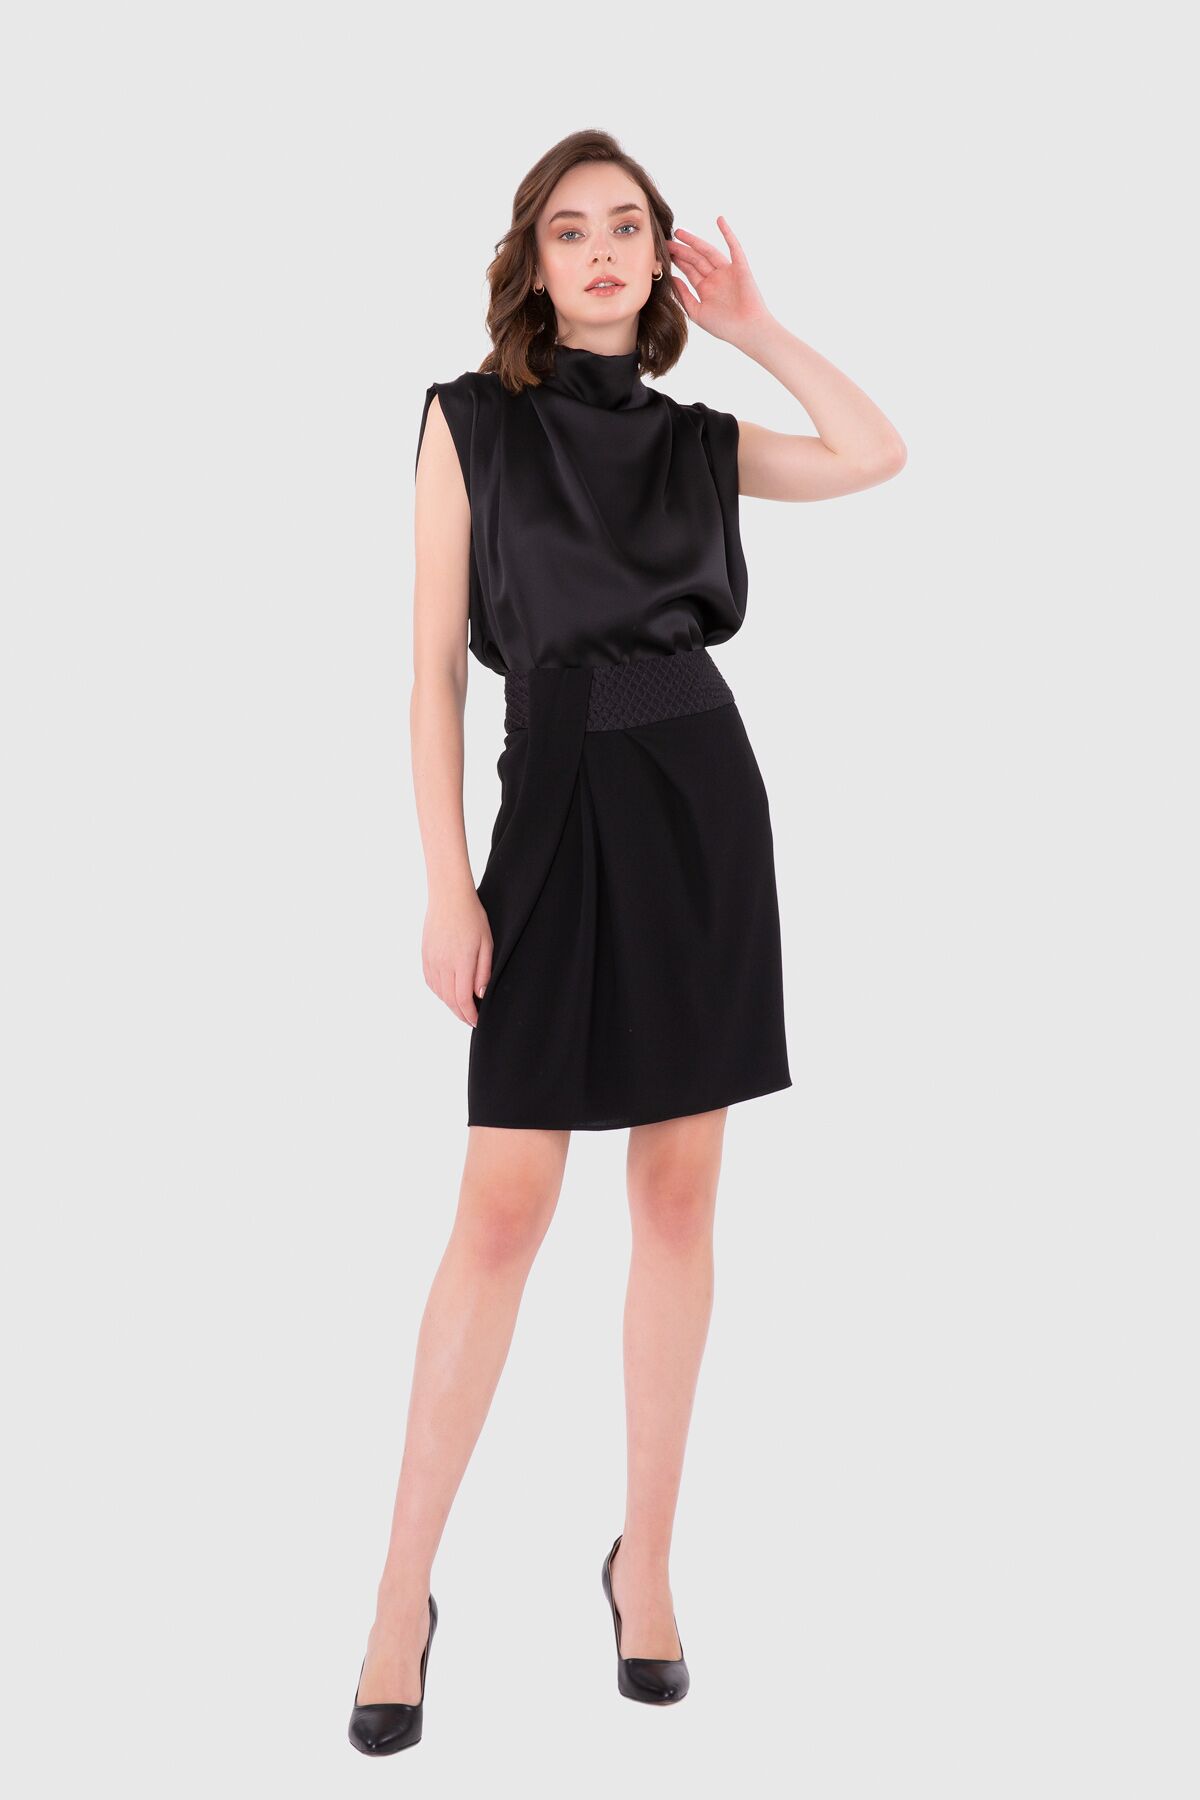 KIWE - Quilted Detailed Pleated Black Skirt